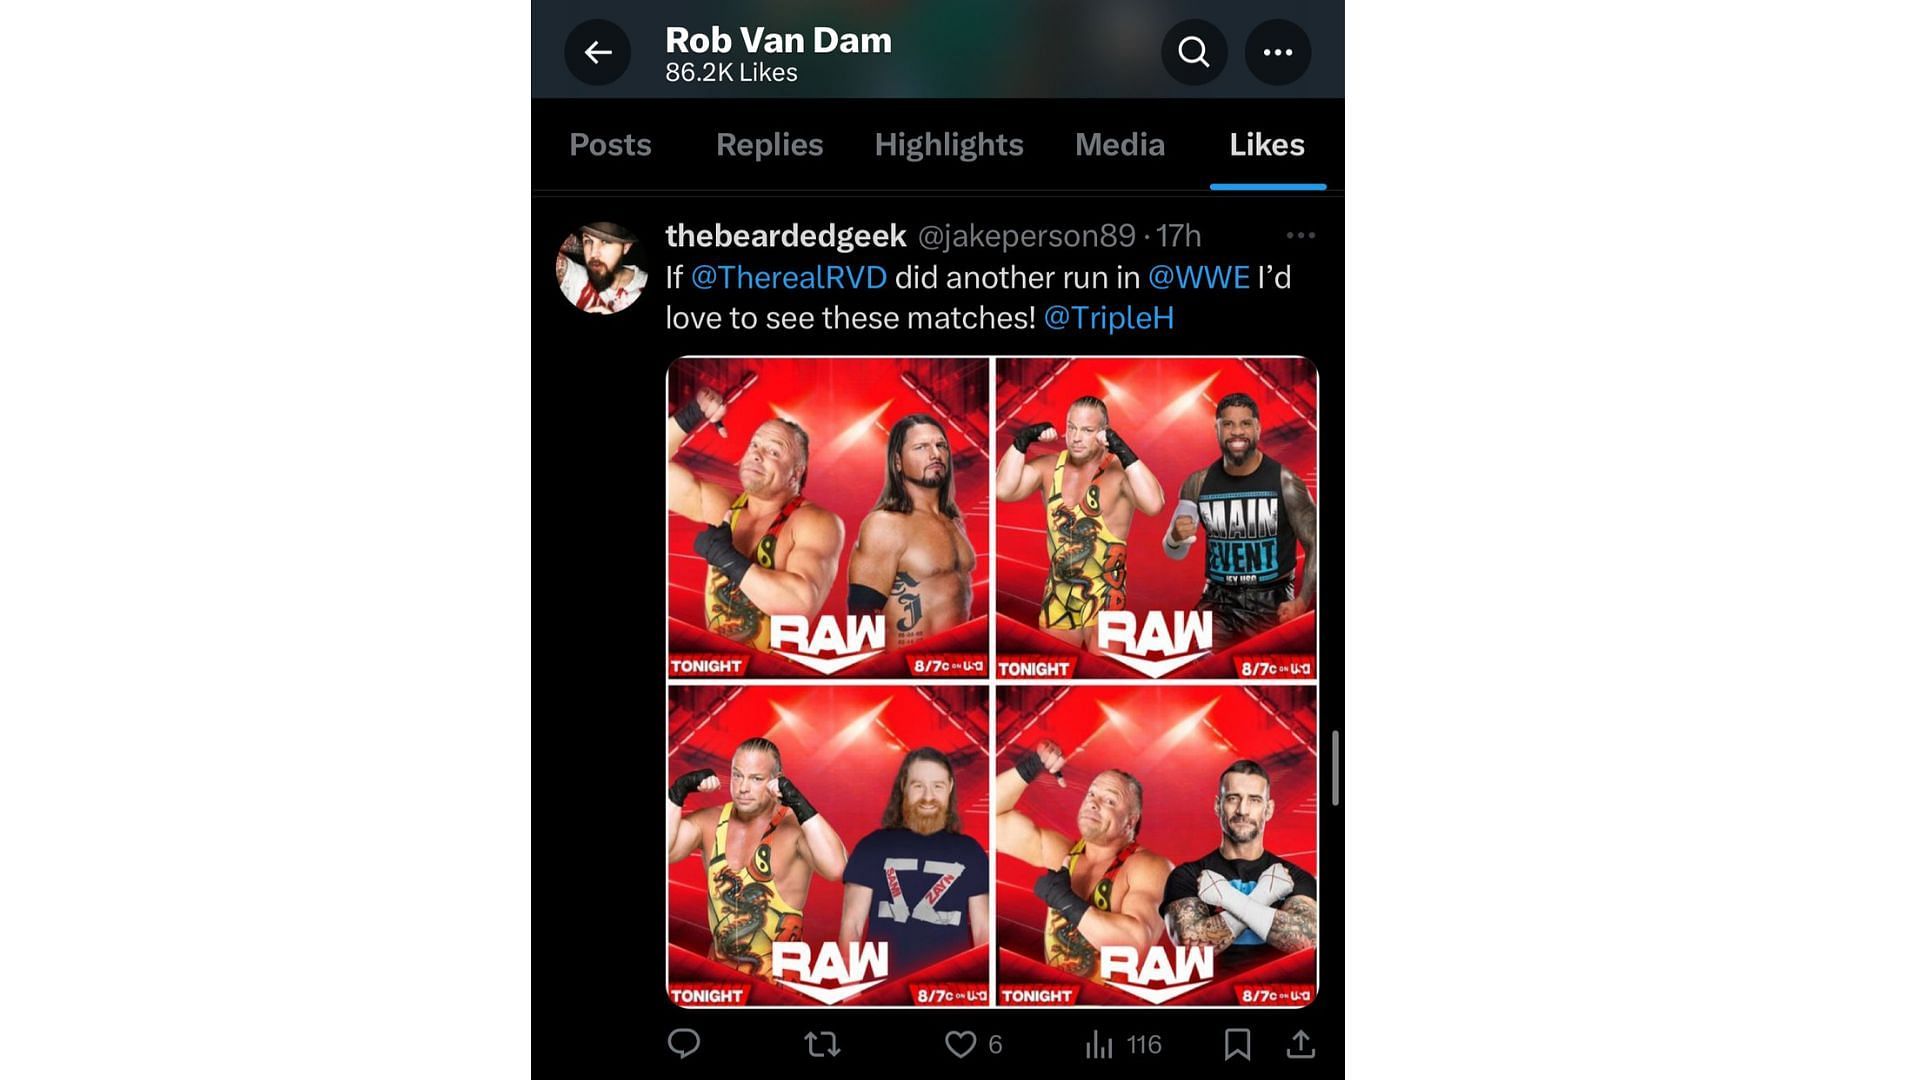 Rob Van Dam liked a fan tweet pitting him against several WWE stars